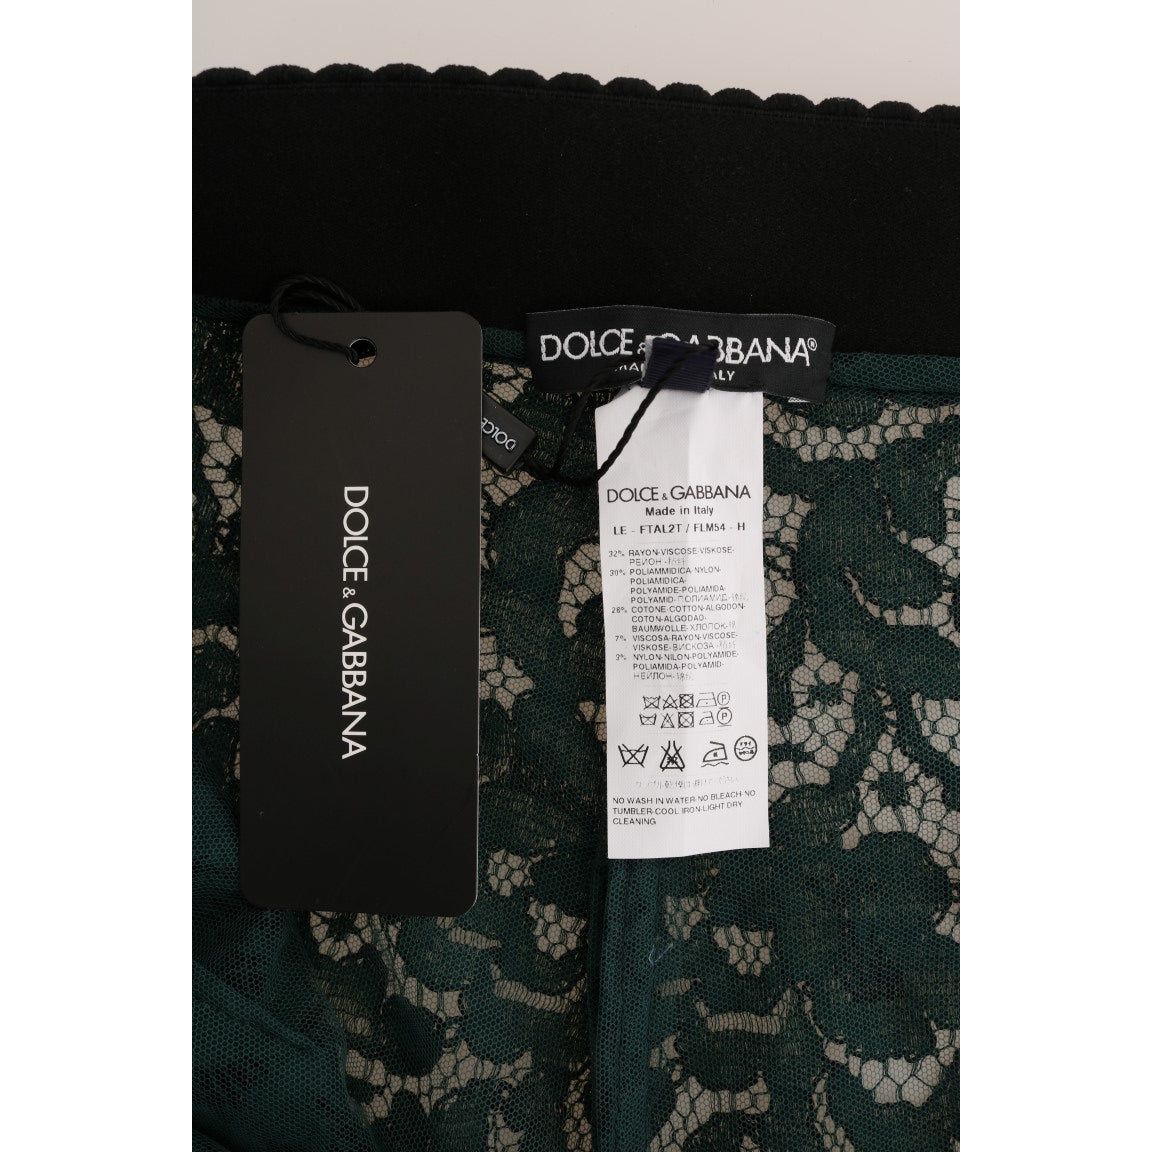 Dolce & Gabbana High Waist Floral Lace Slim Trousers green-floral-lace-leggings-pants